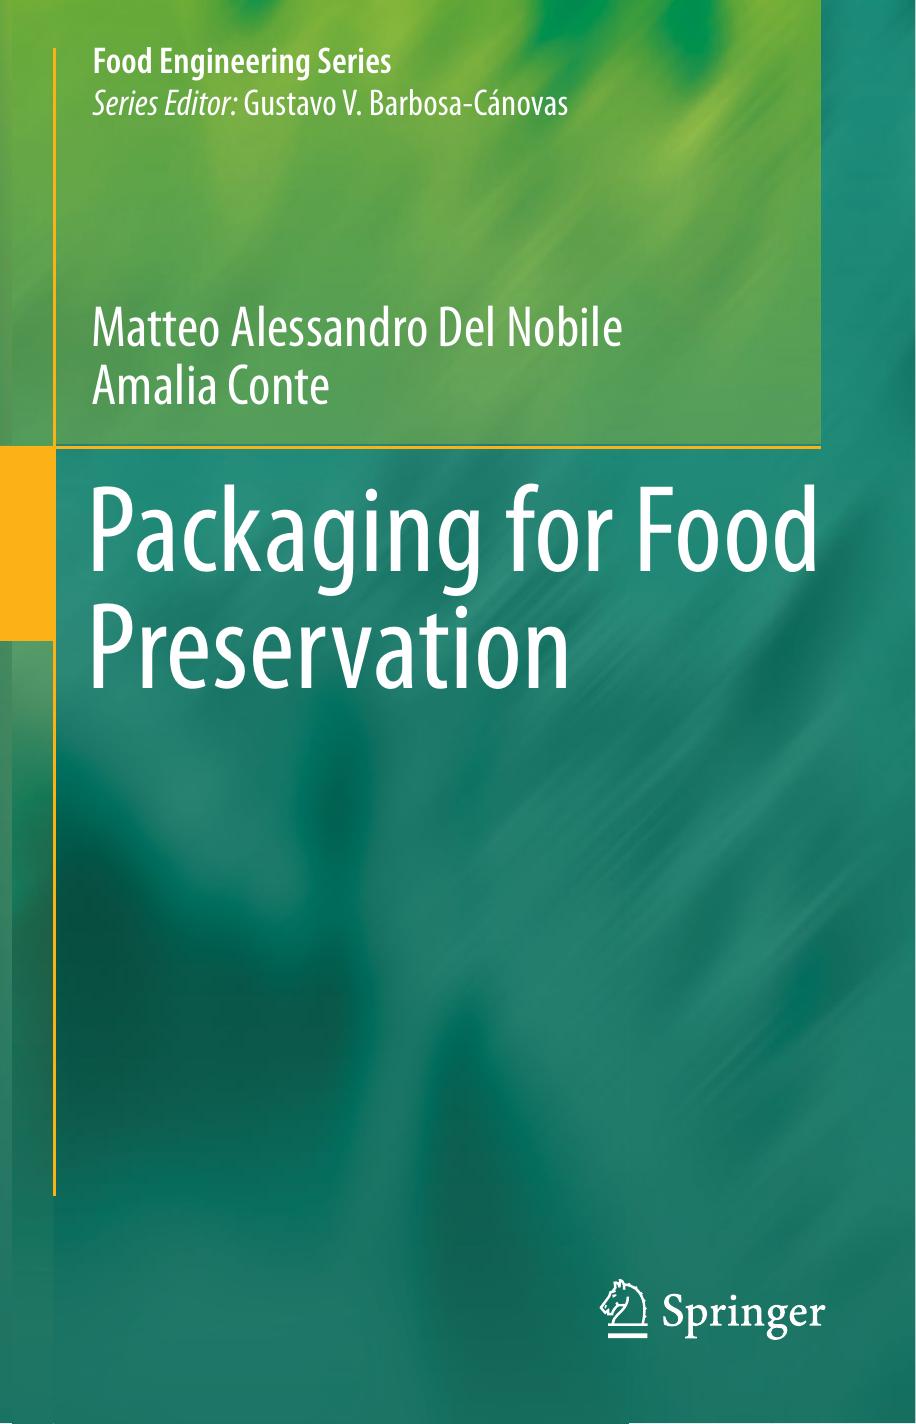 Packgaing for Food Preservation 2013